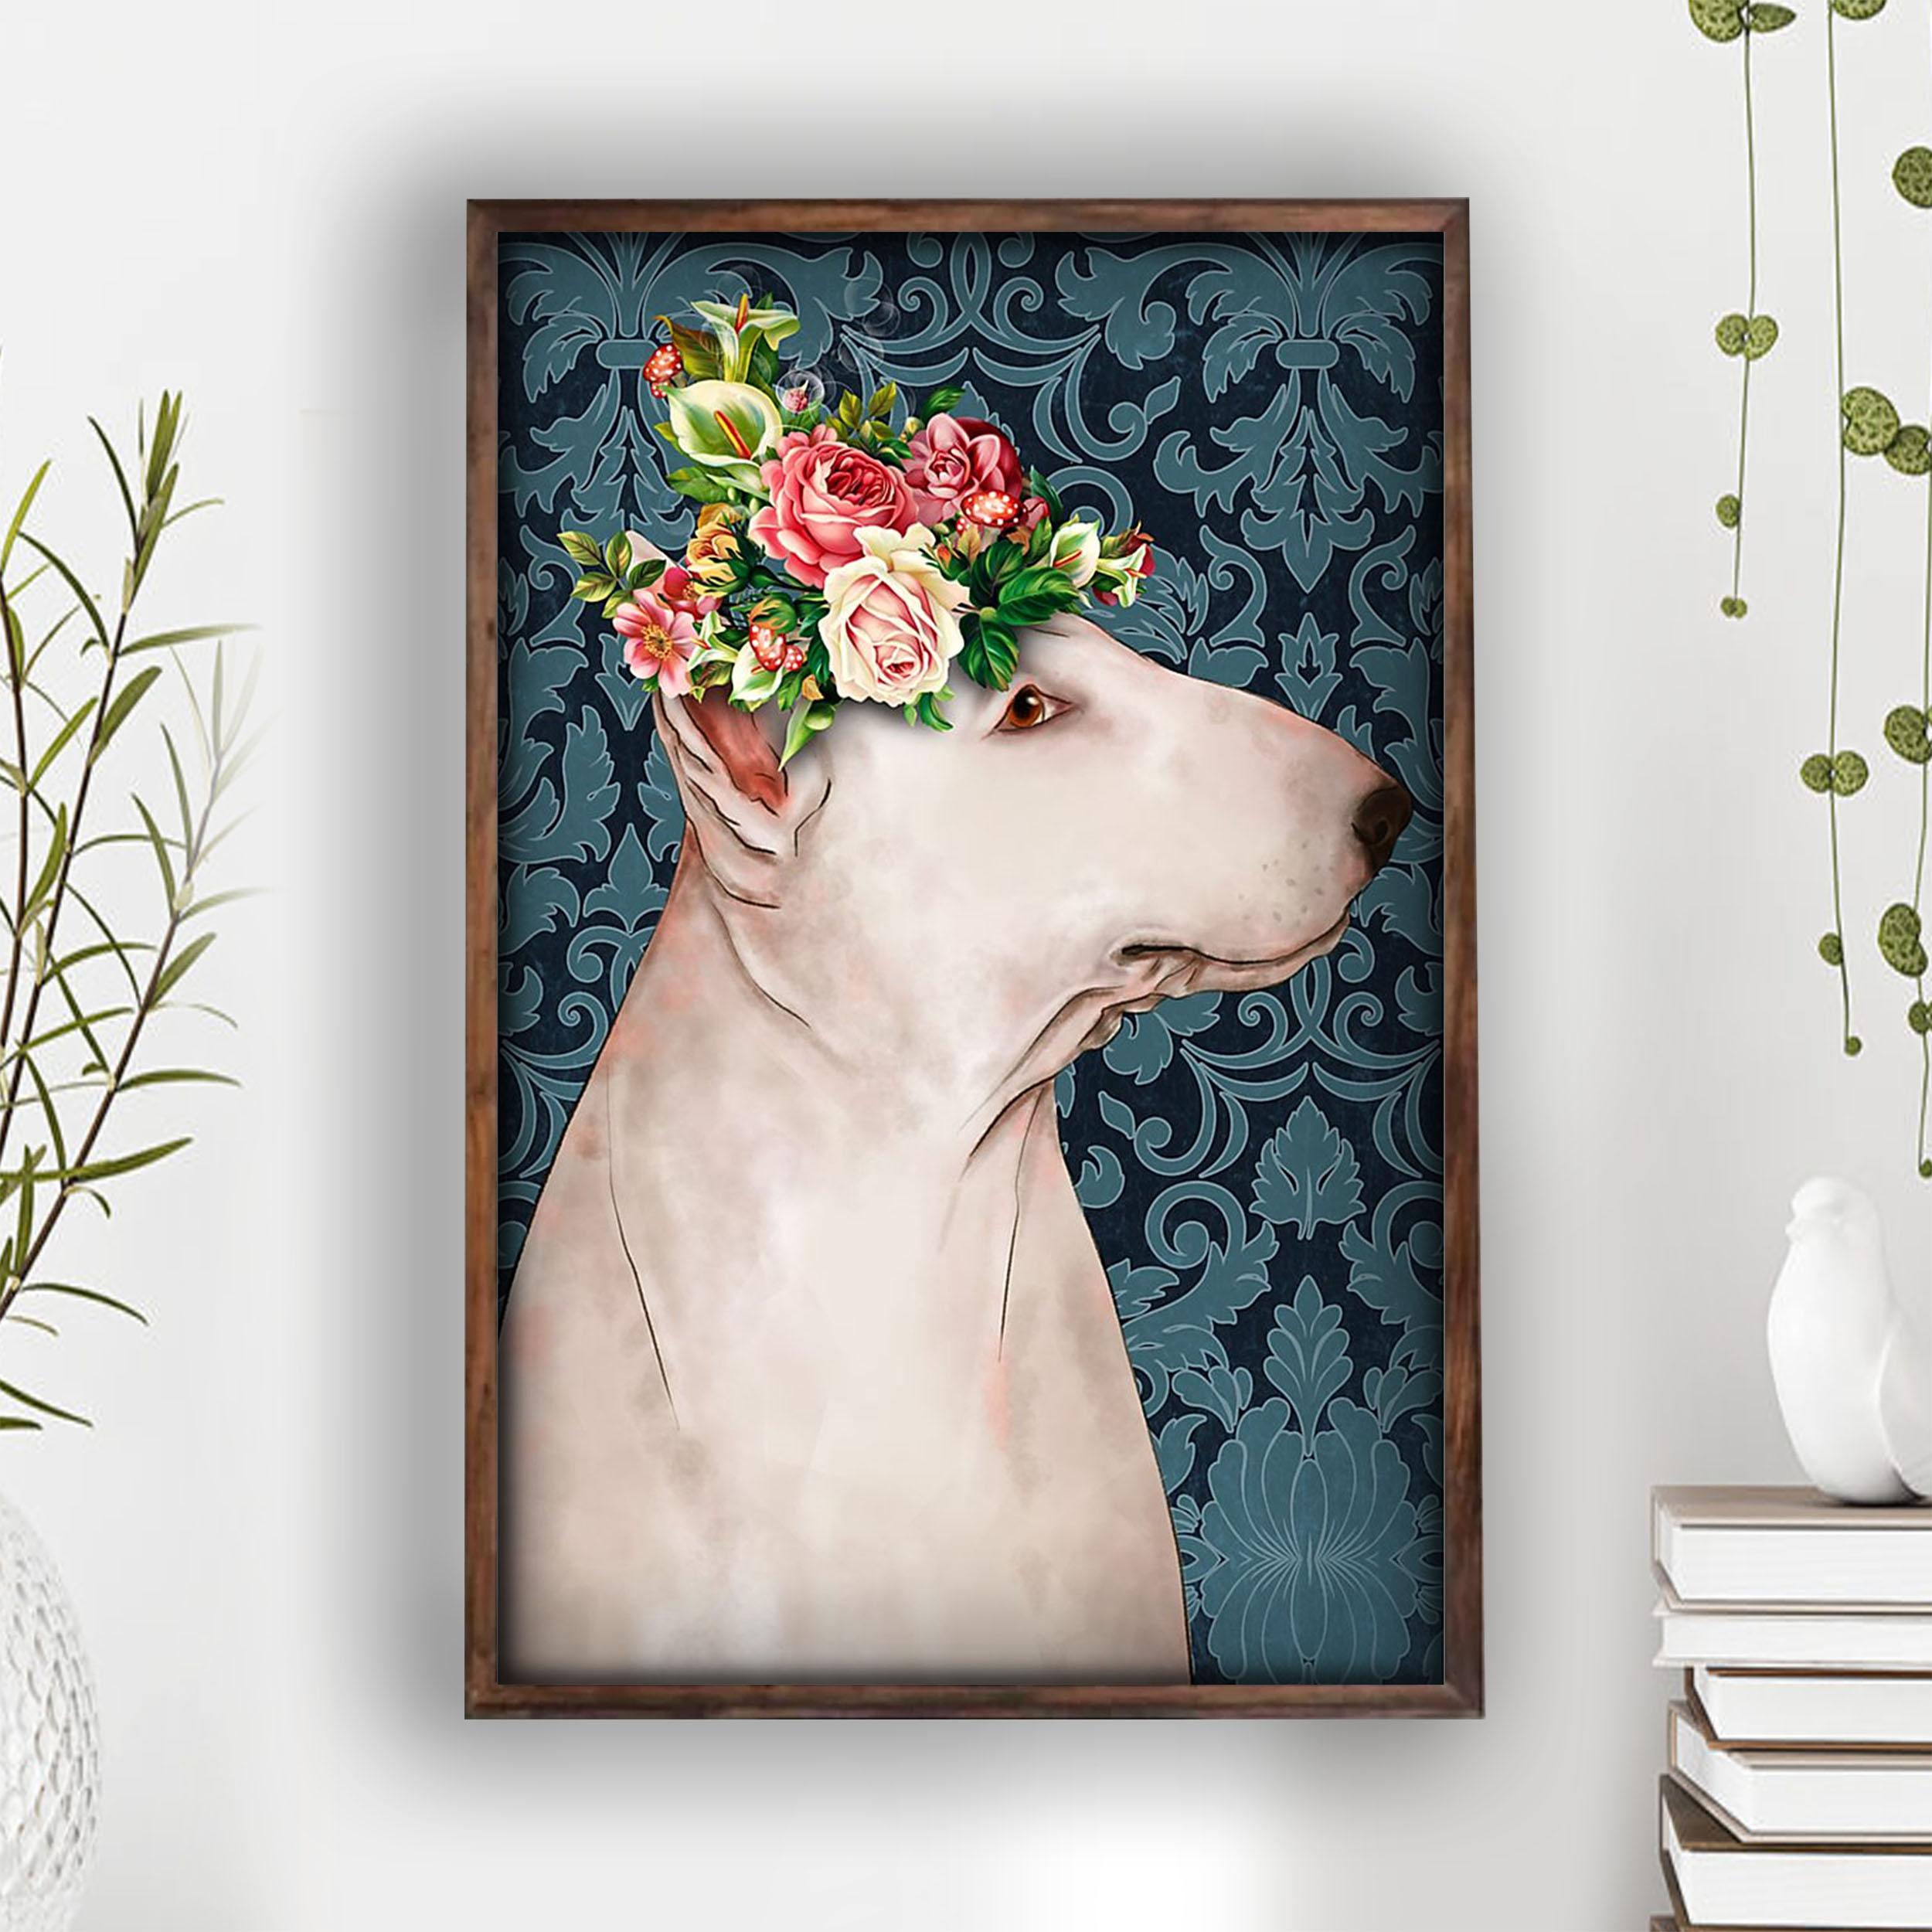 Bull Terrier Poster Bull Terrier Lovers Flower Crown And Dog Wall Art Home Decor Poster Print